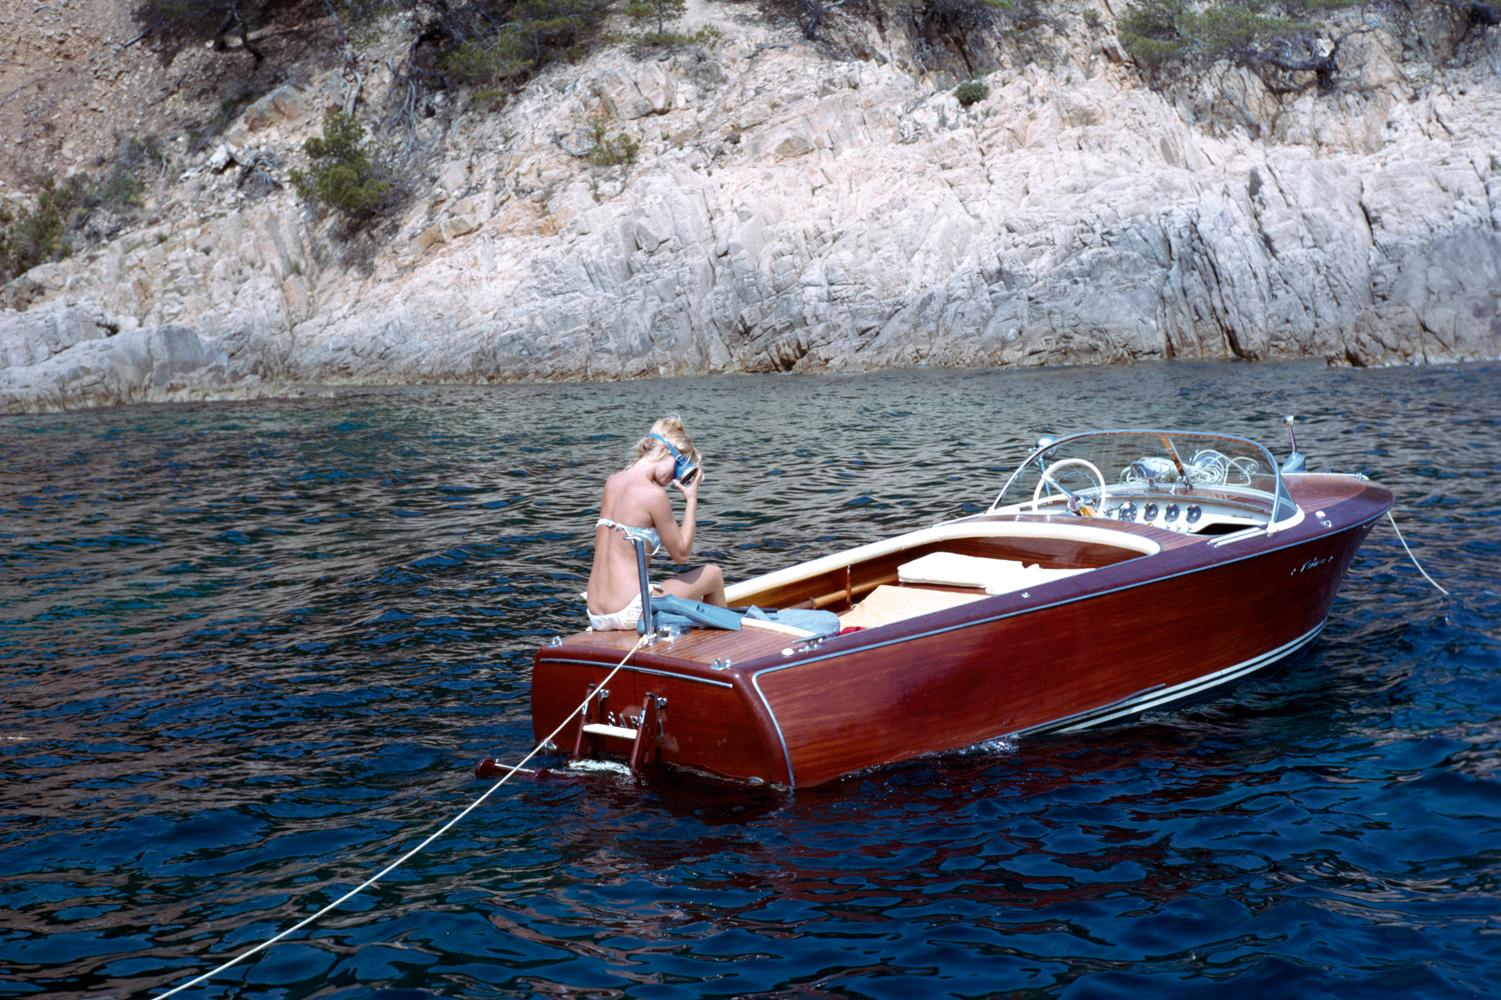 Ghislain Dussart Figurative Photograph - 'Riva Boat Bardot' 1964 Brigitte Bardot St Tropez - HUGE OVERSIZE C print